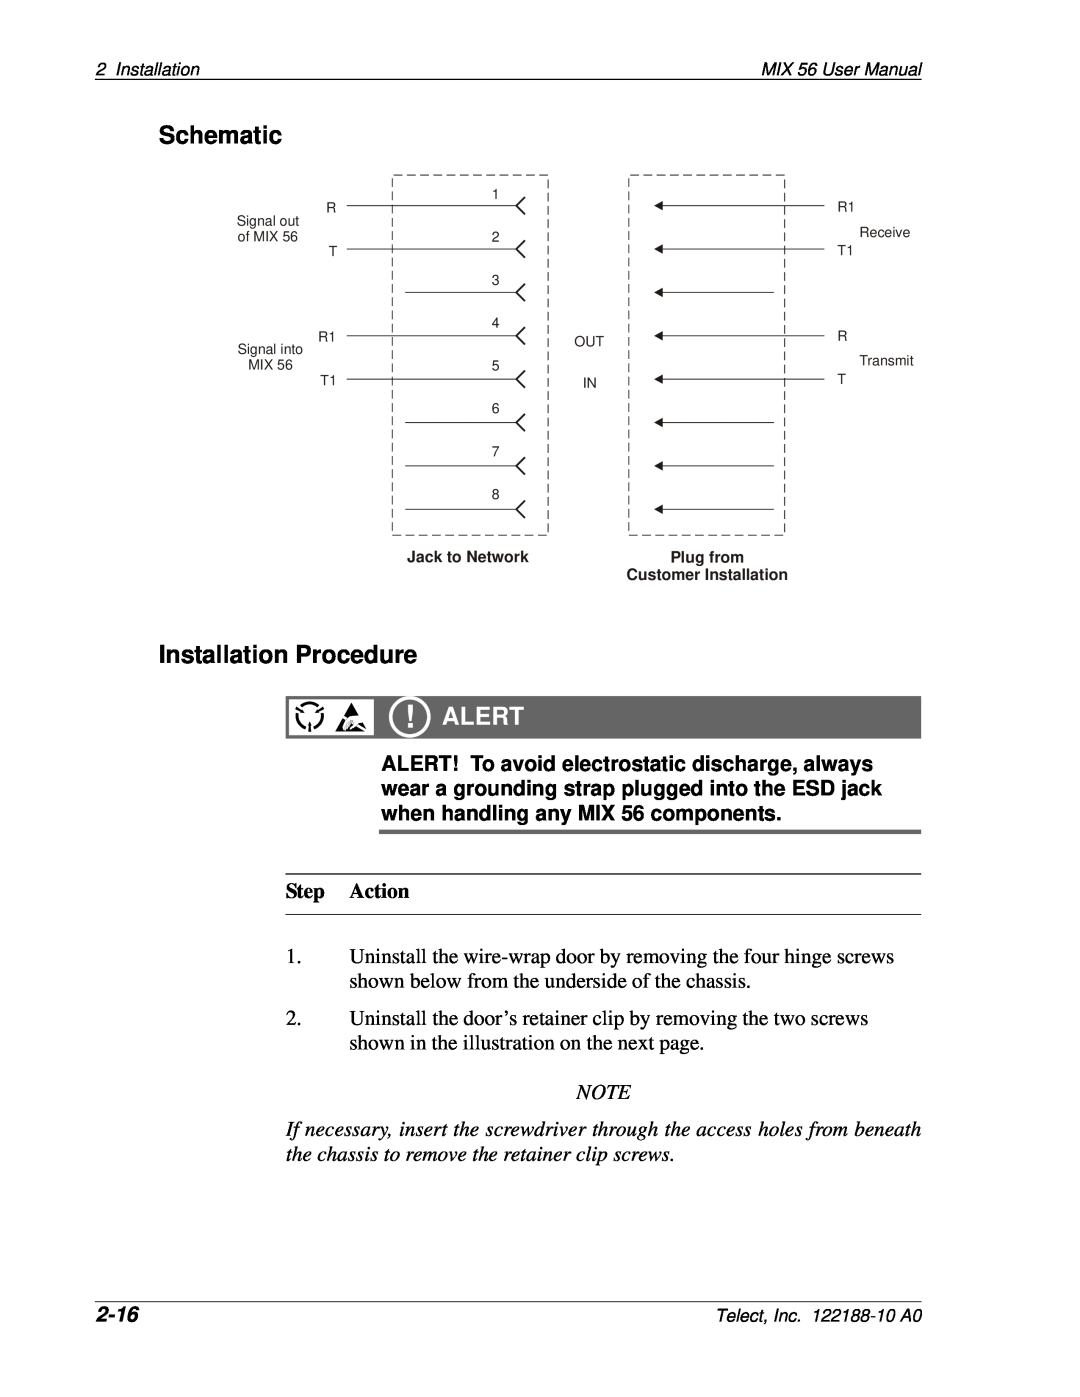 Telect MIX 56 user manual Schematic, Installation Procedure, 2-16, Alert, Step Action 